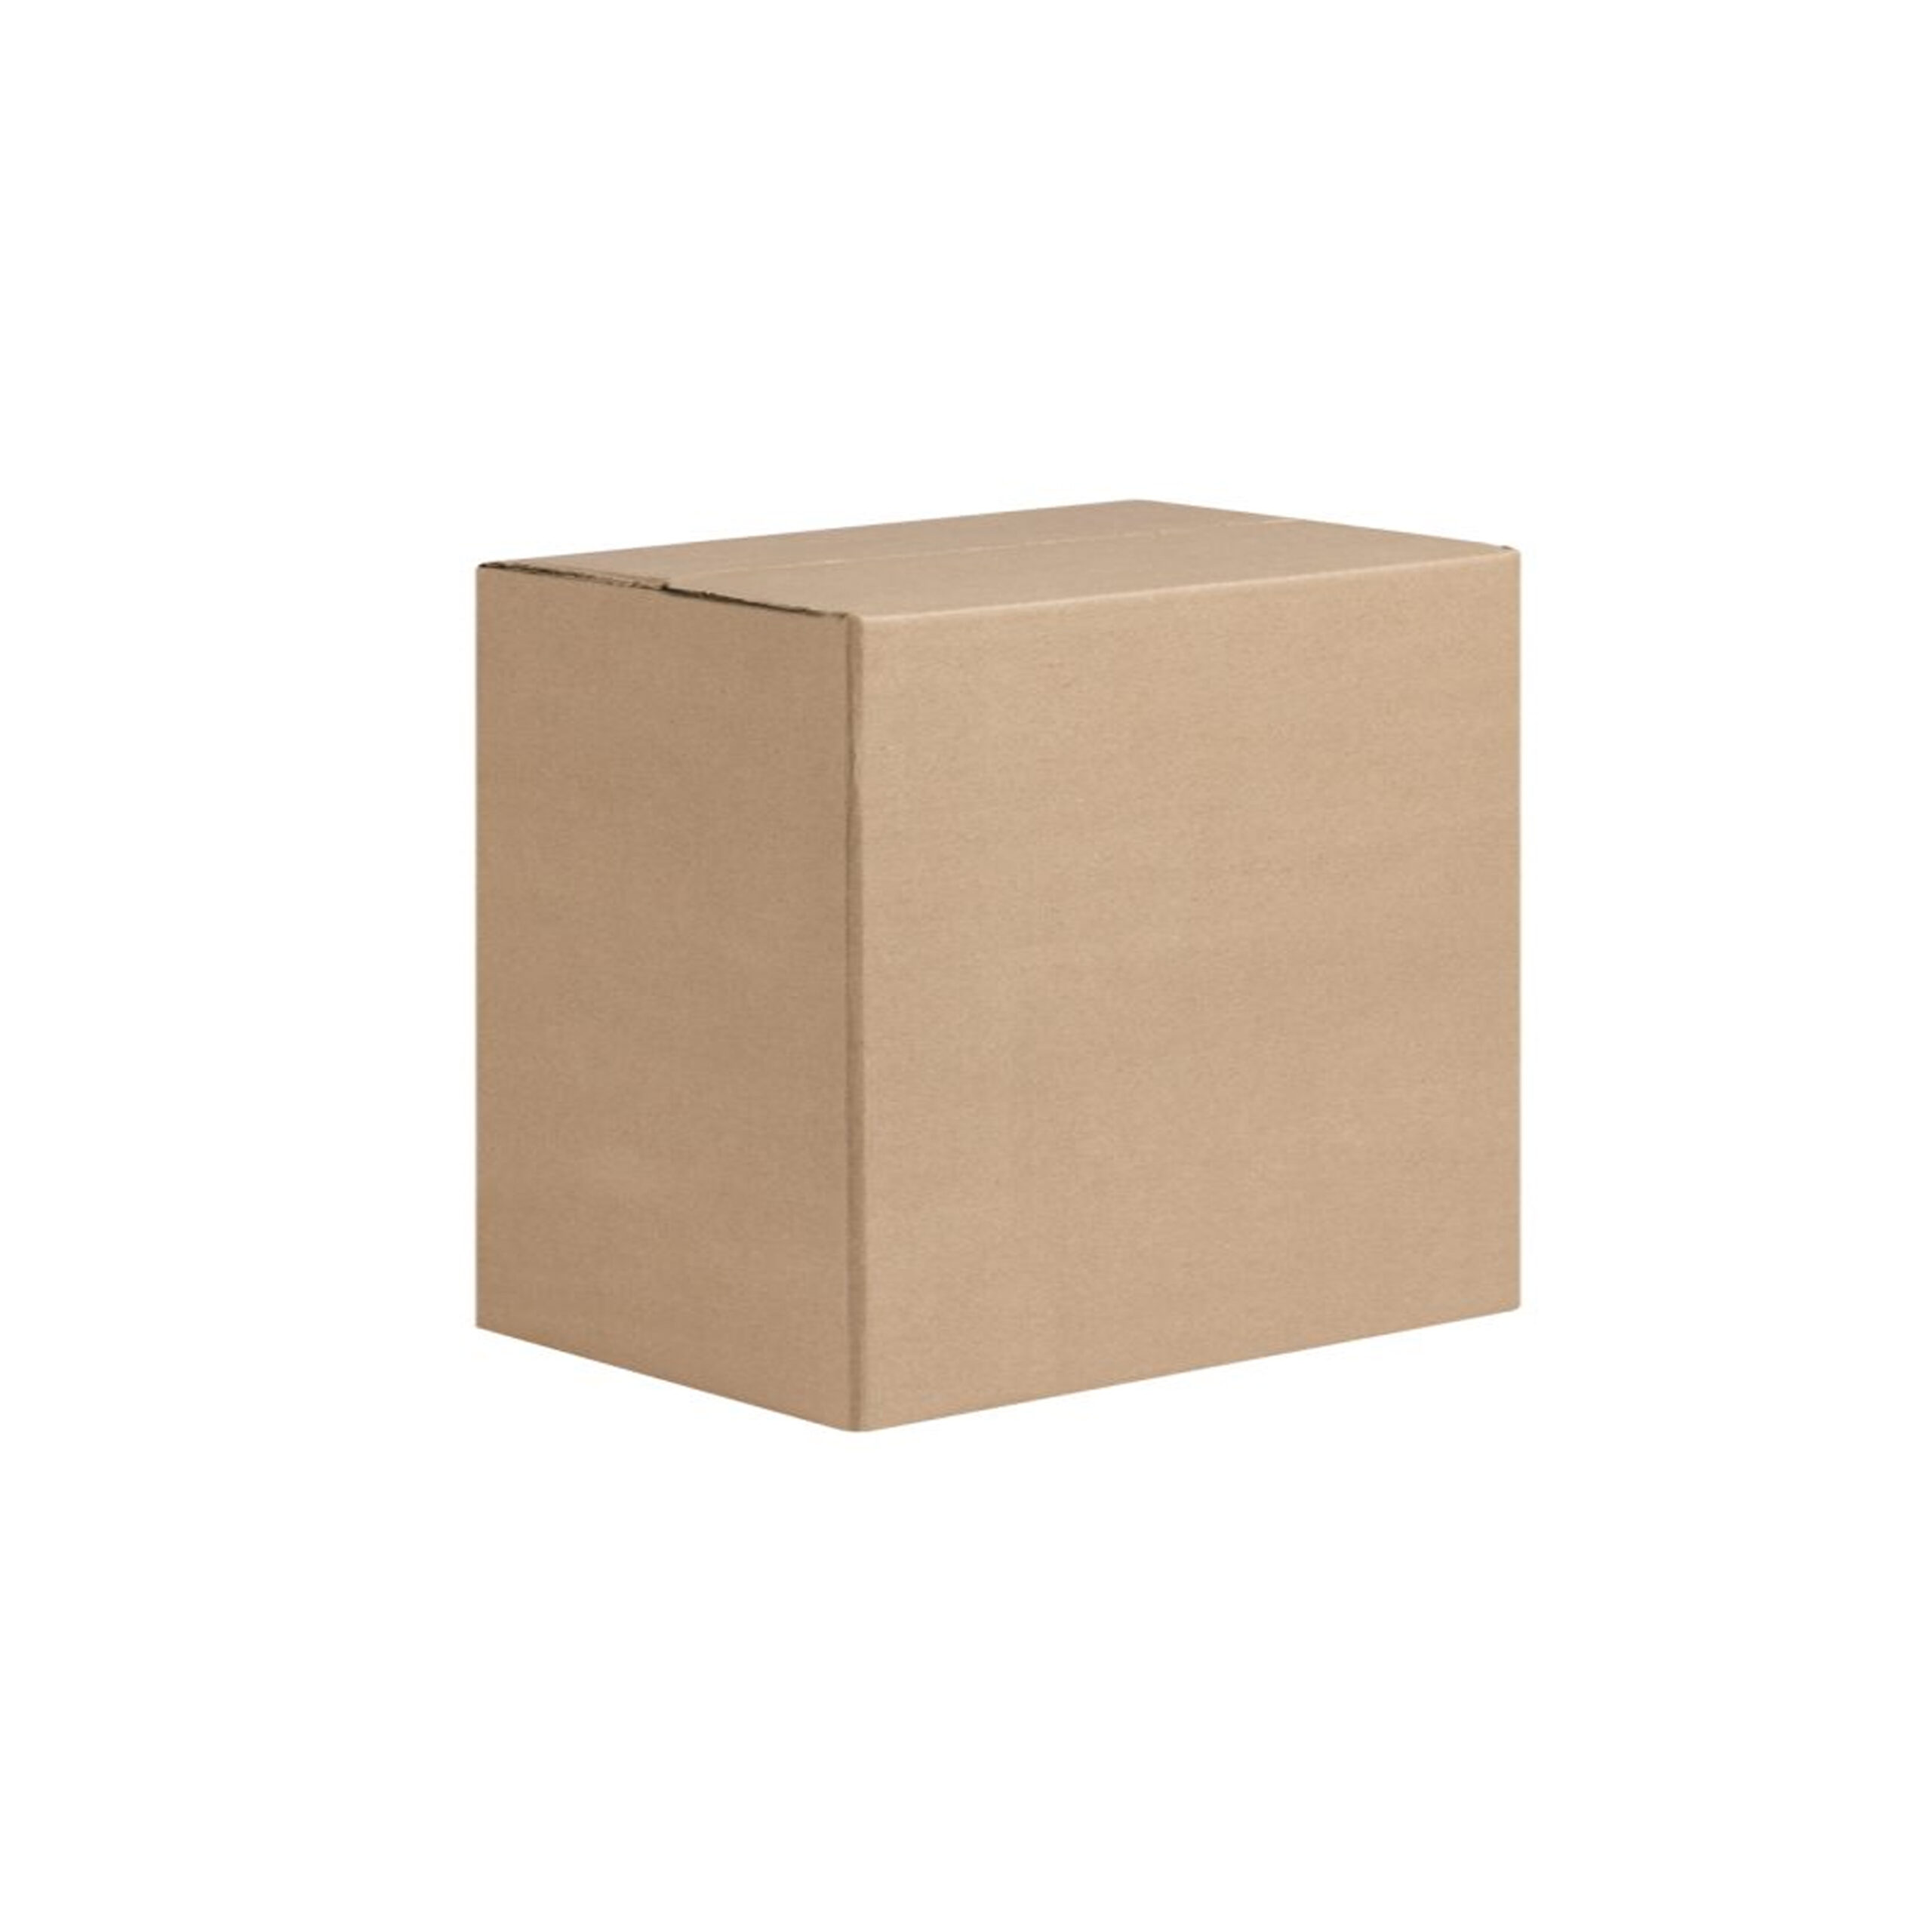 CORRUGATED
SINGLE WALL BOX 
#1 150x100x100mm